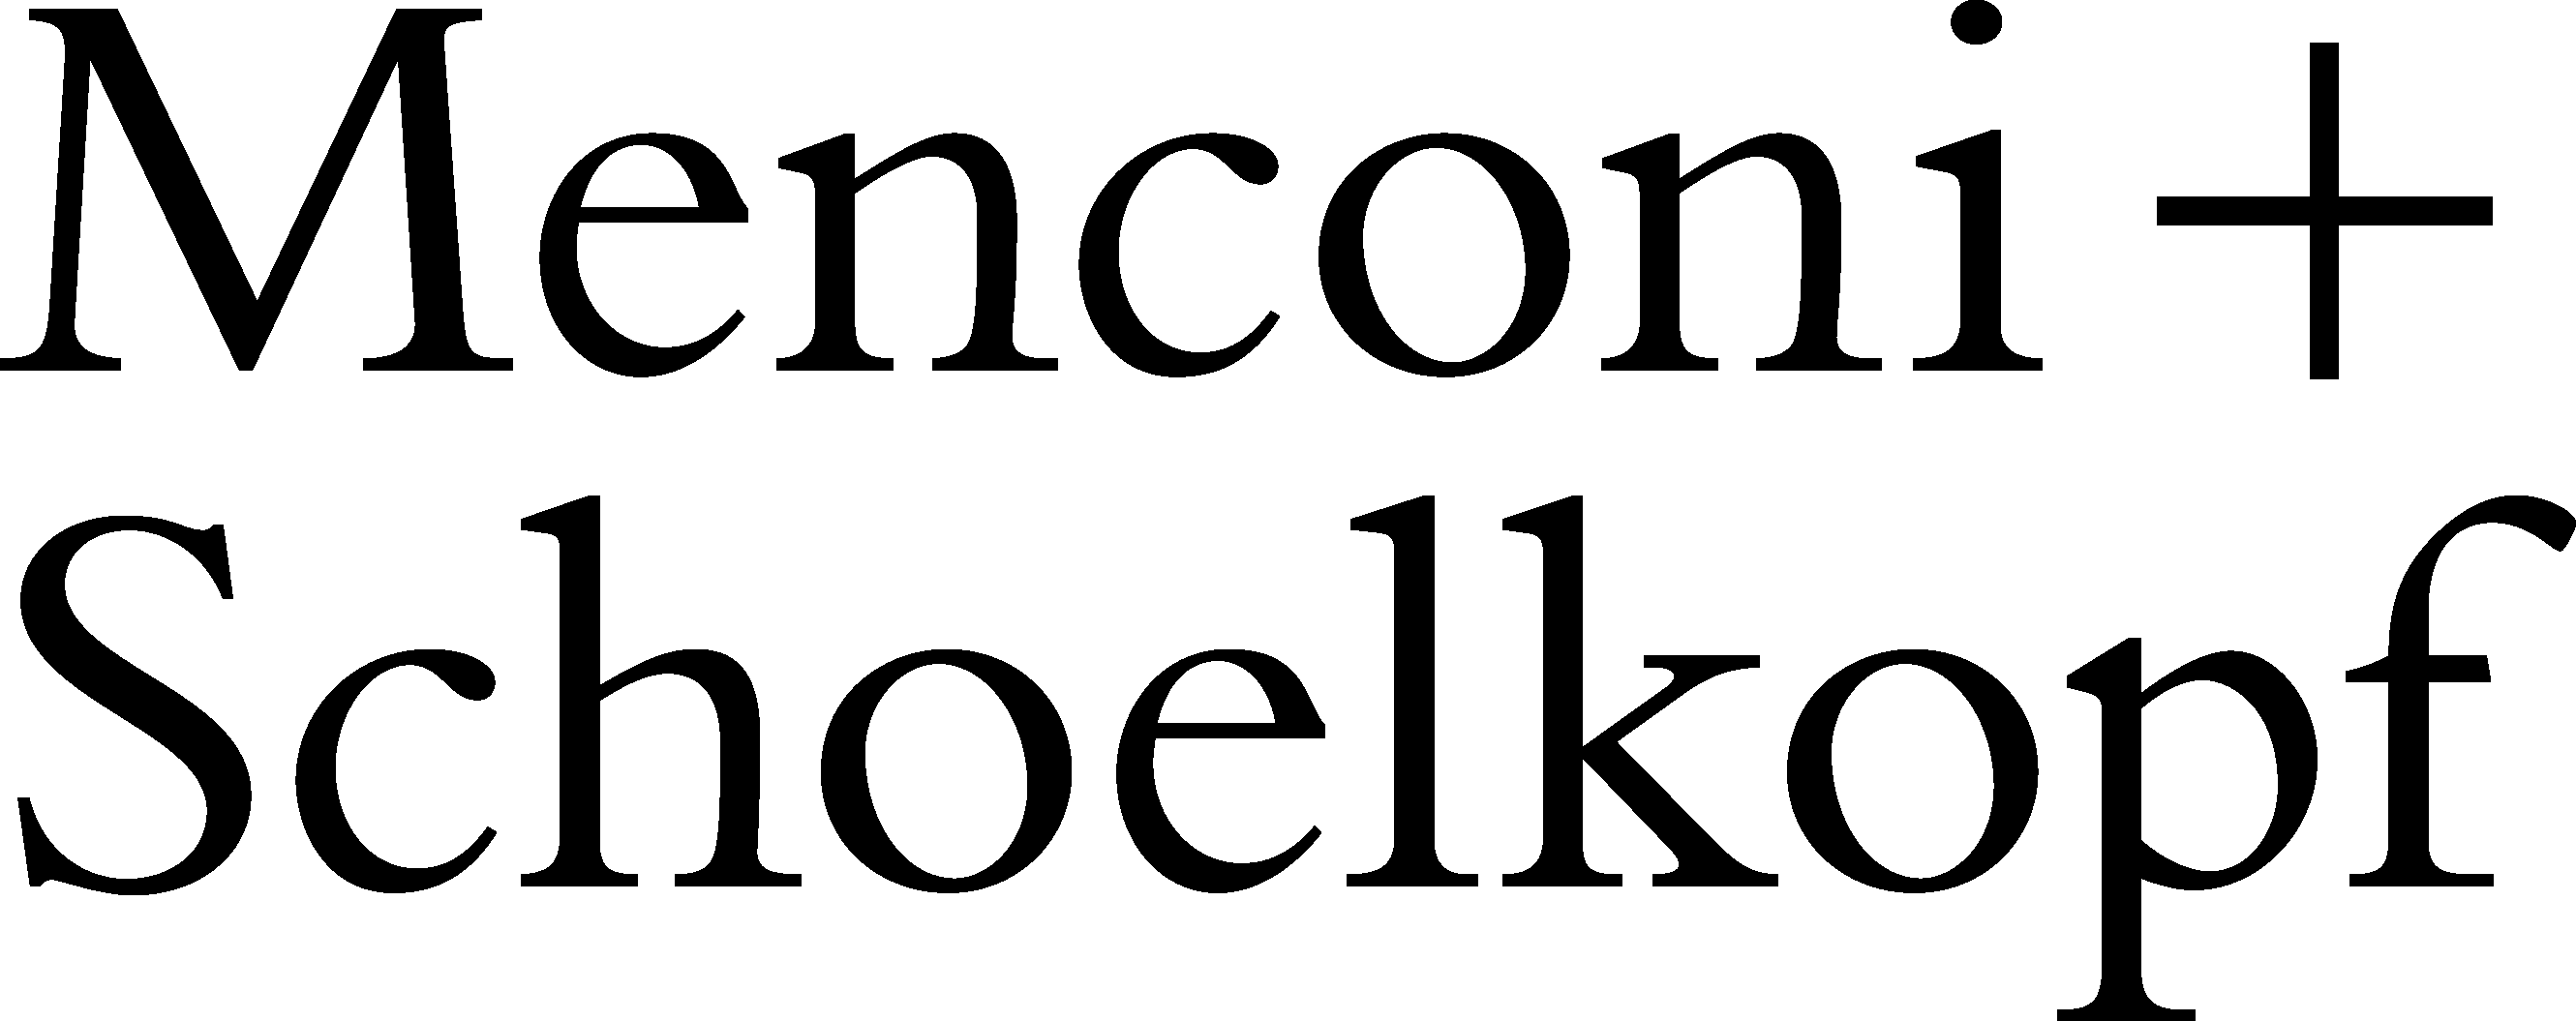  Menconi & Schoelkopf company logo